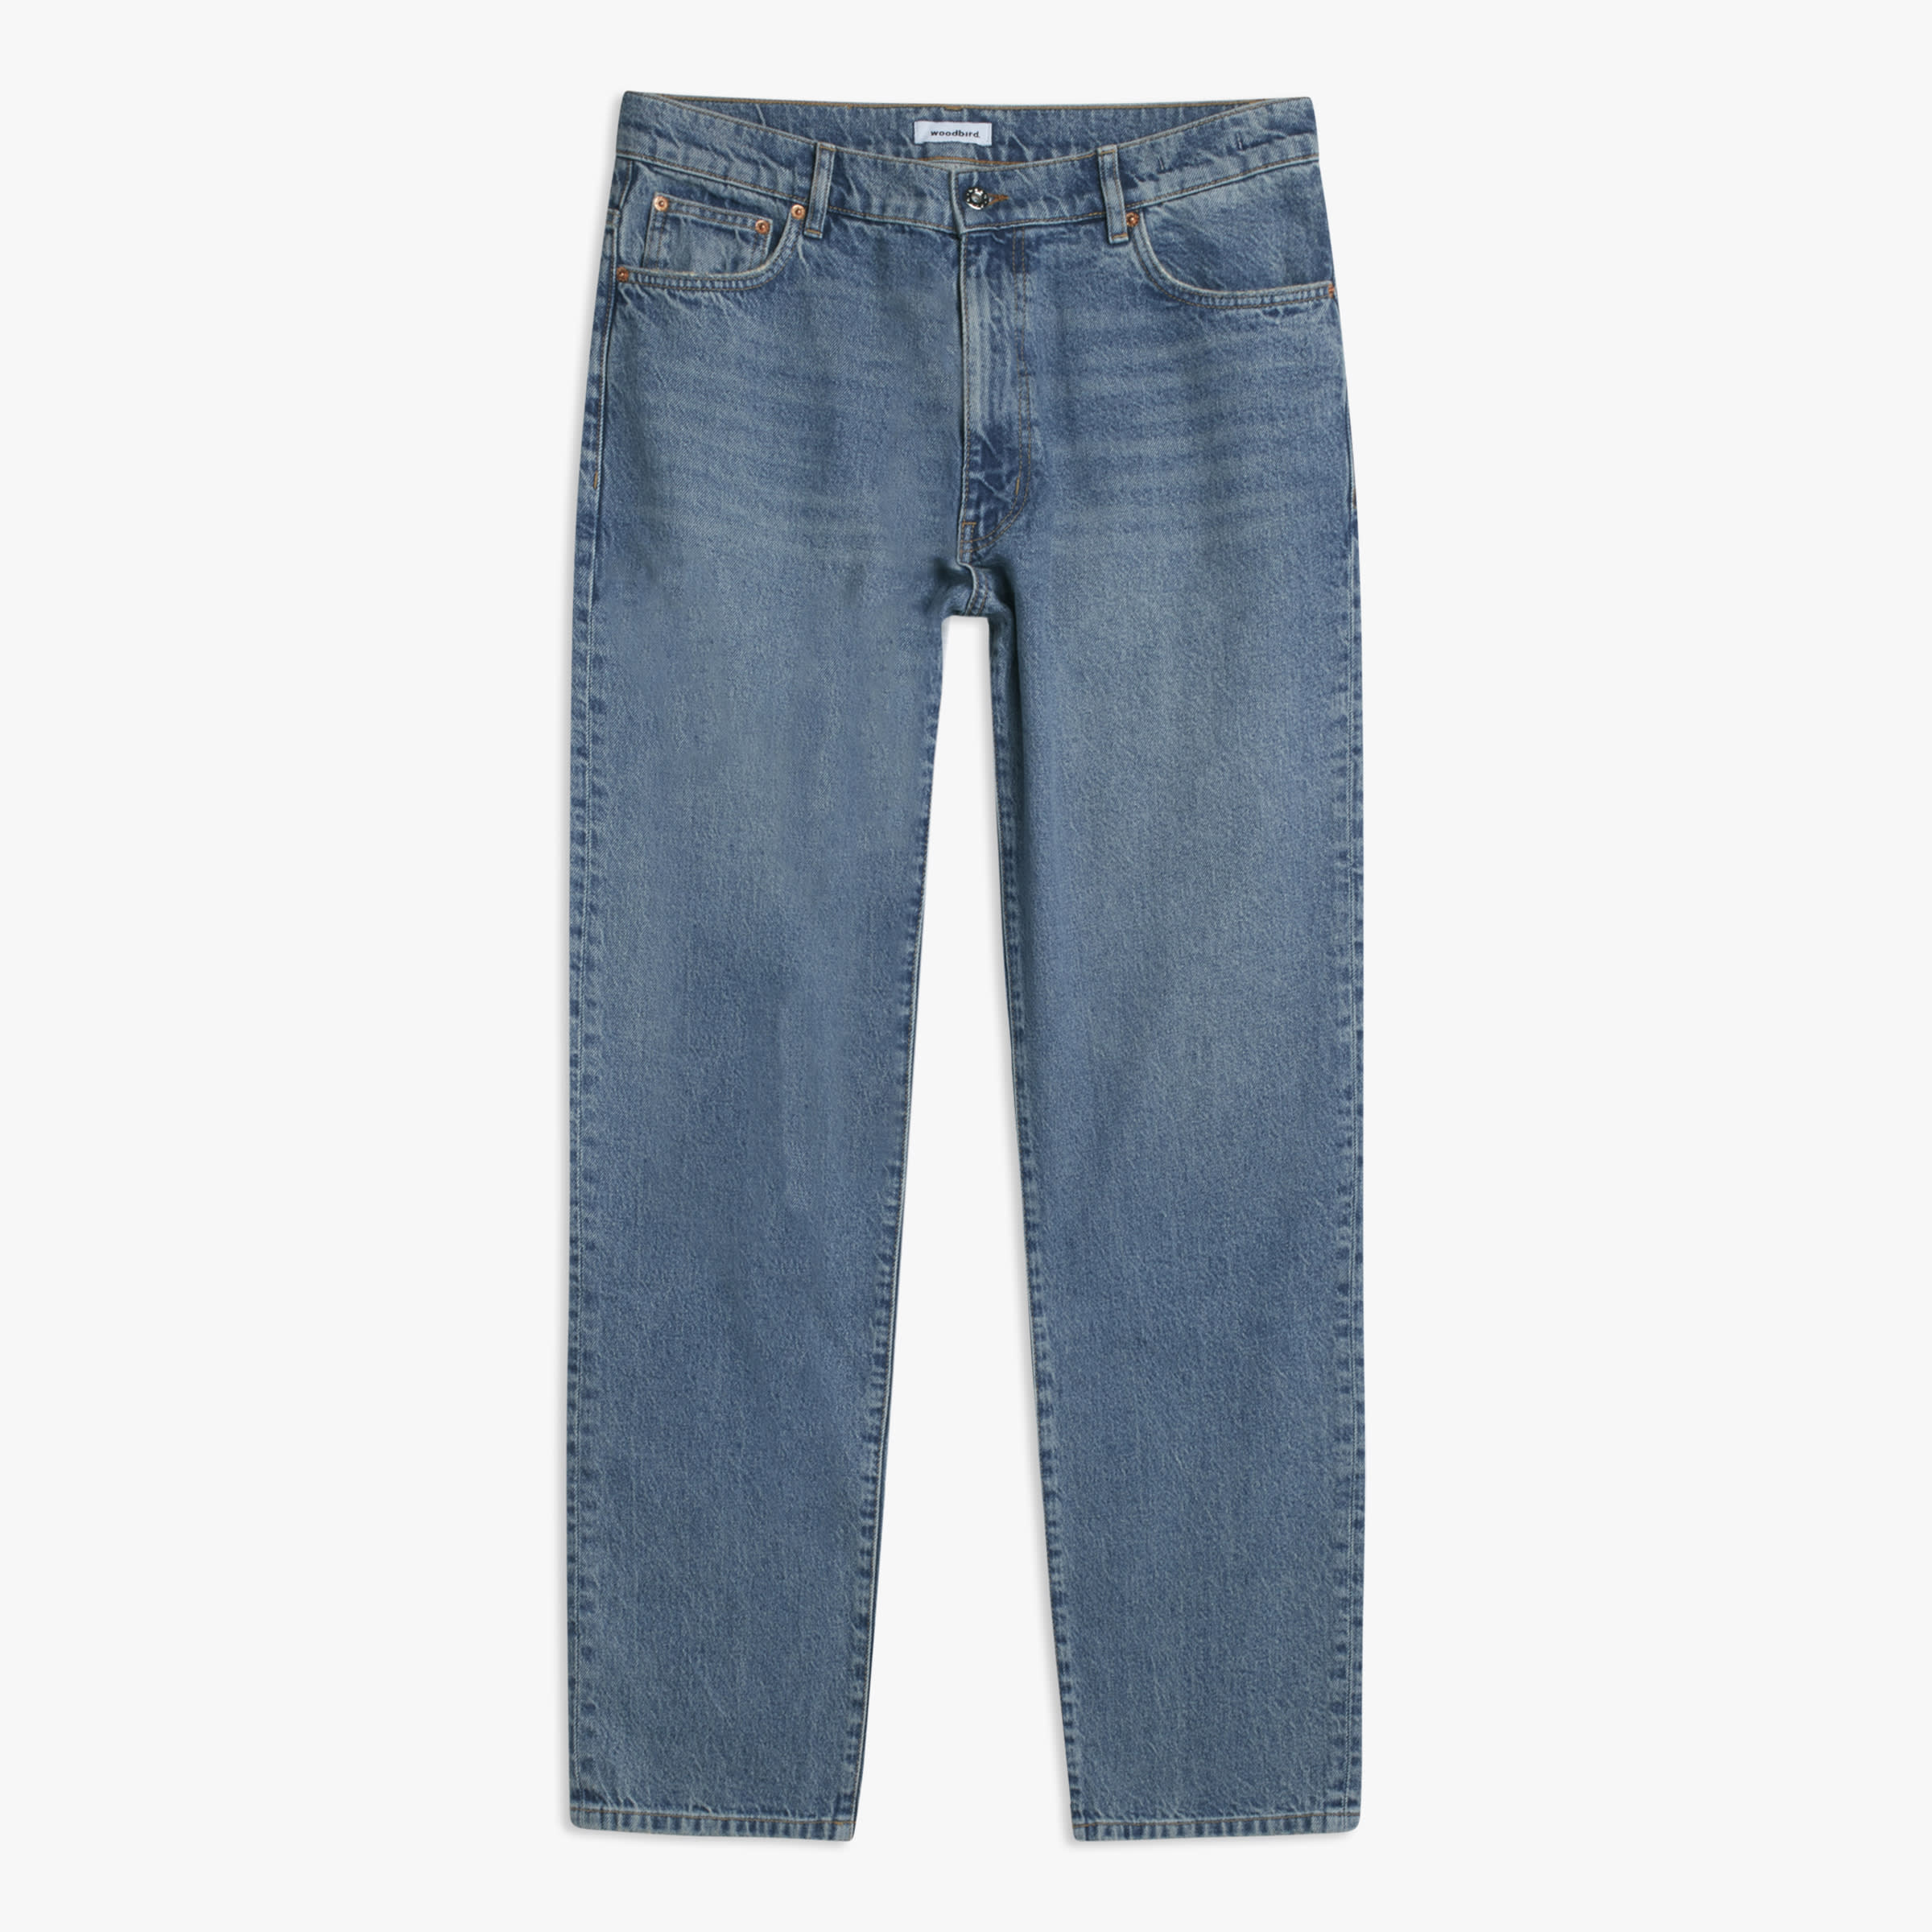 Leroy Doone Jeans från Woodbird